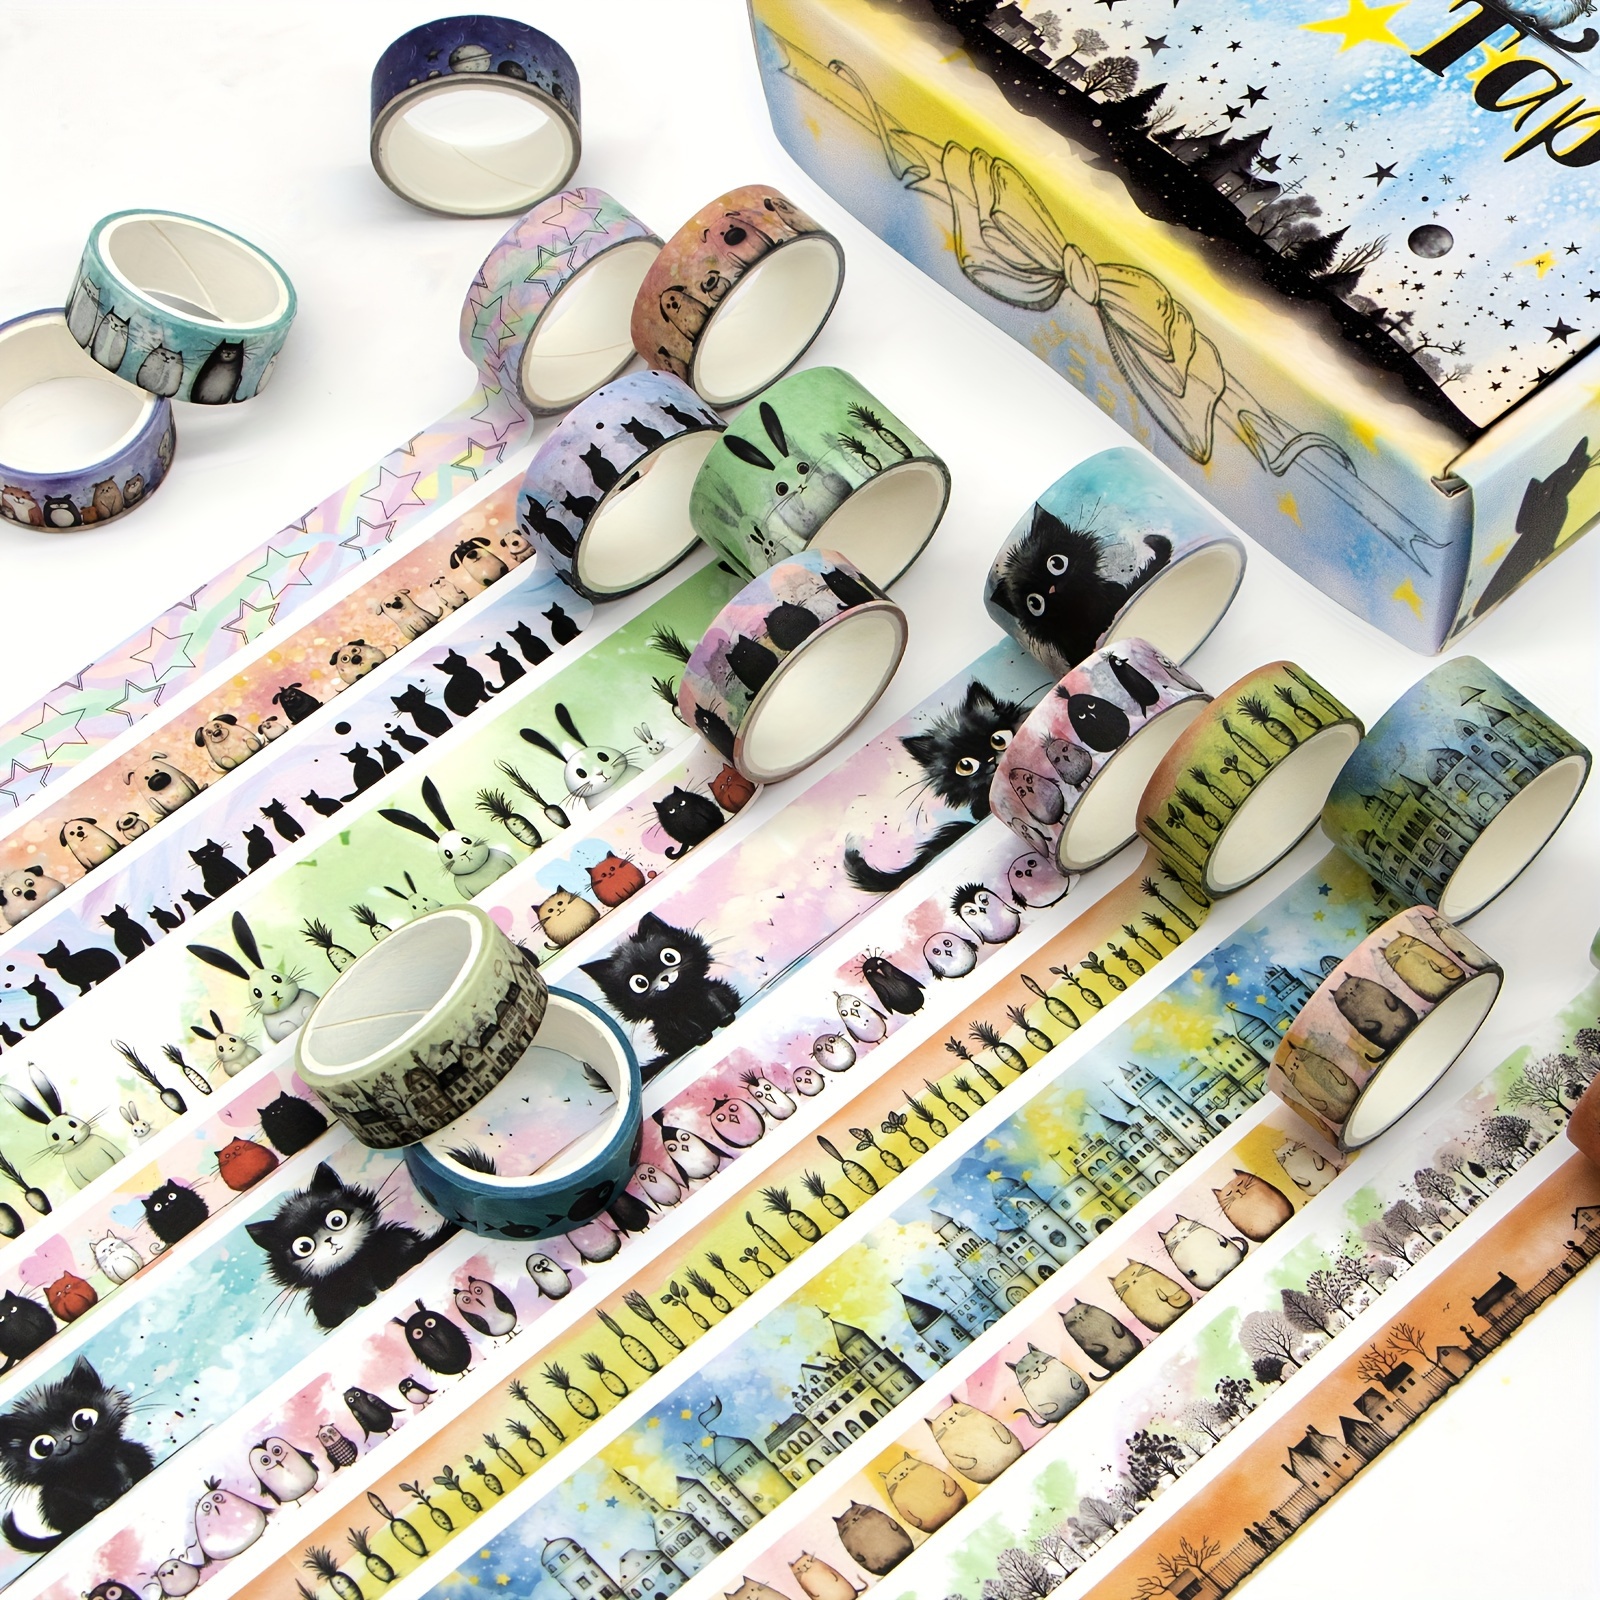 

24pcs Cute Washi Tape Set - 24 Rolls Kawaii Animals Decorative Washi Tape For Scrapbooking Supplies, Bullet Journal Supplies, Junk Journal, Art Craft Tape